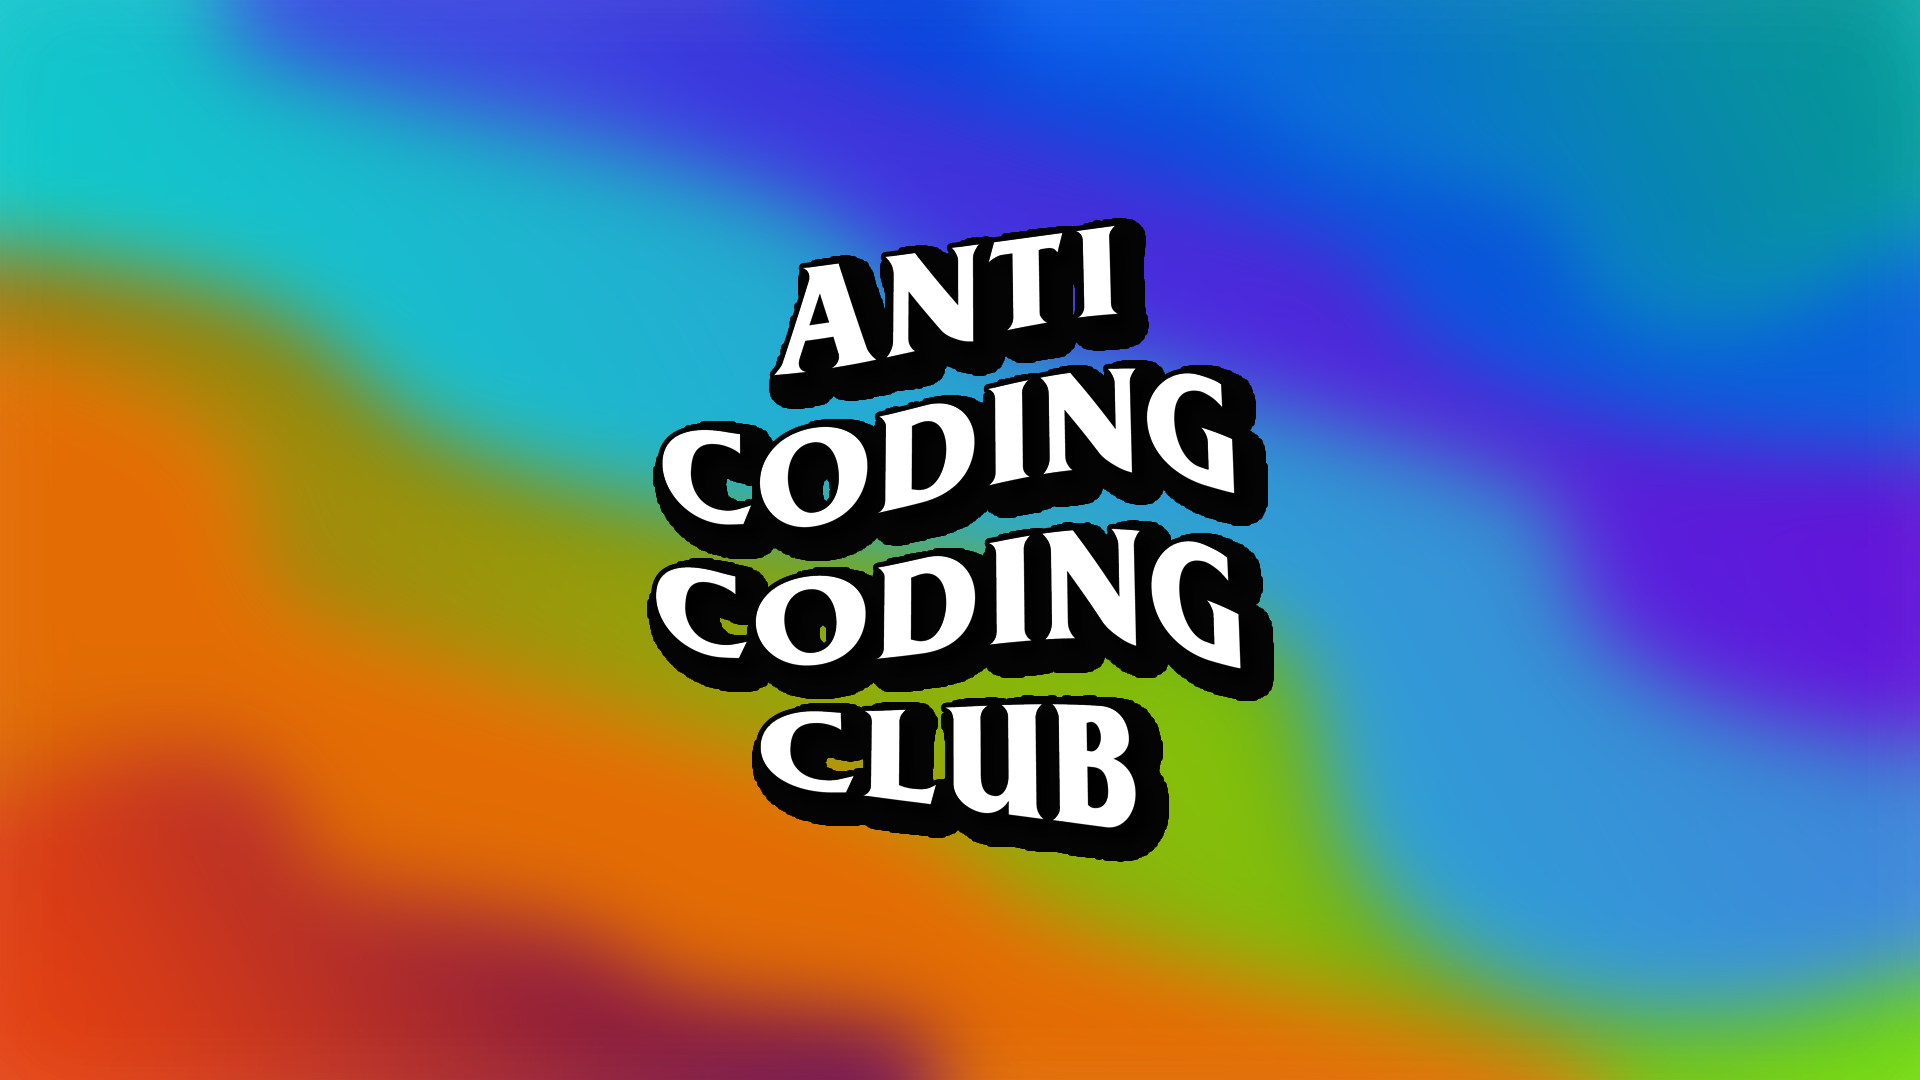 Anti Coding Coding Club Wallpapers